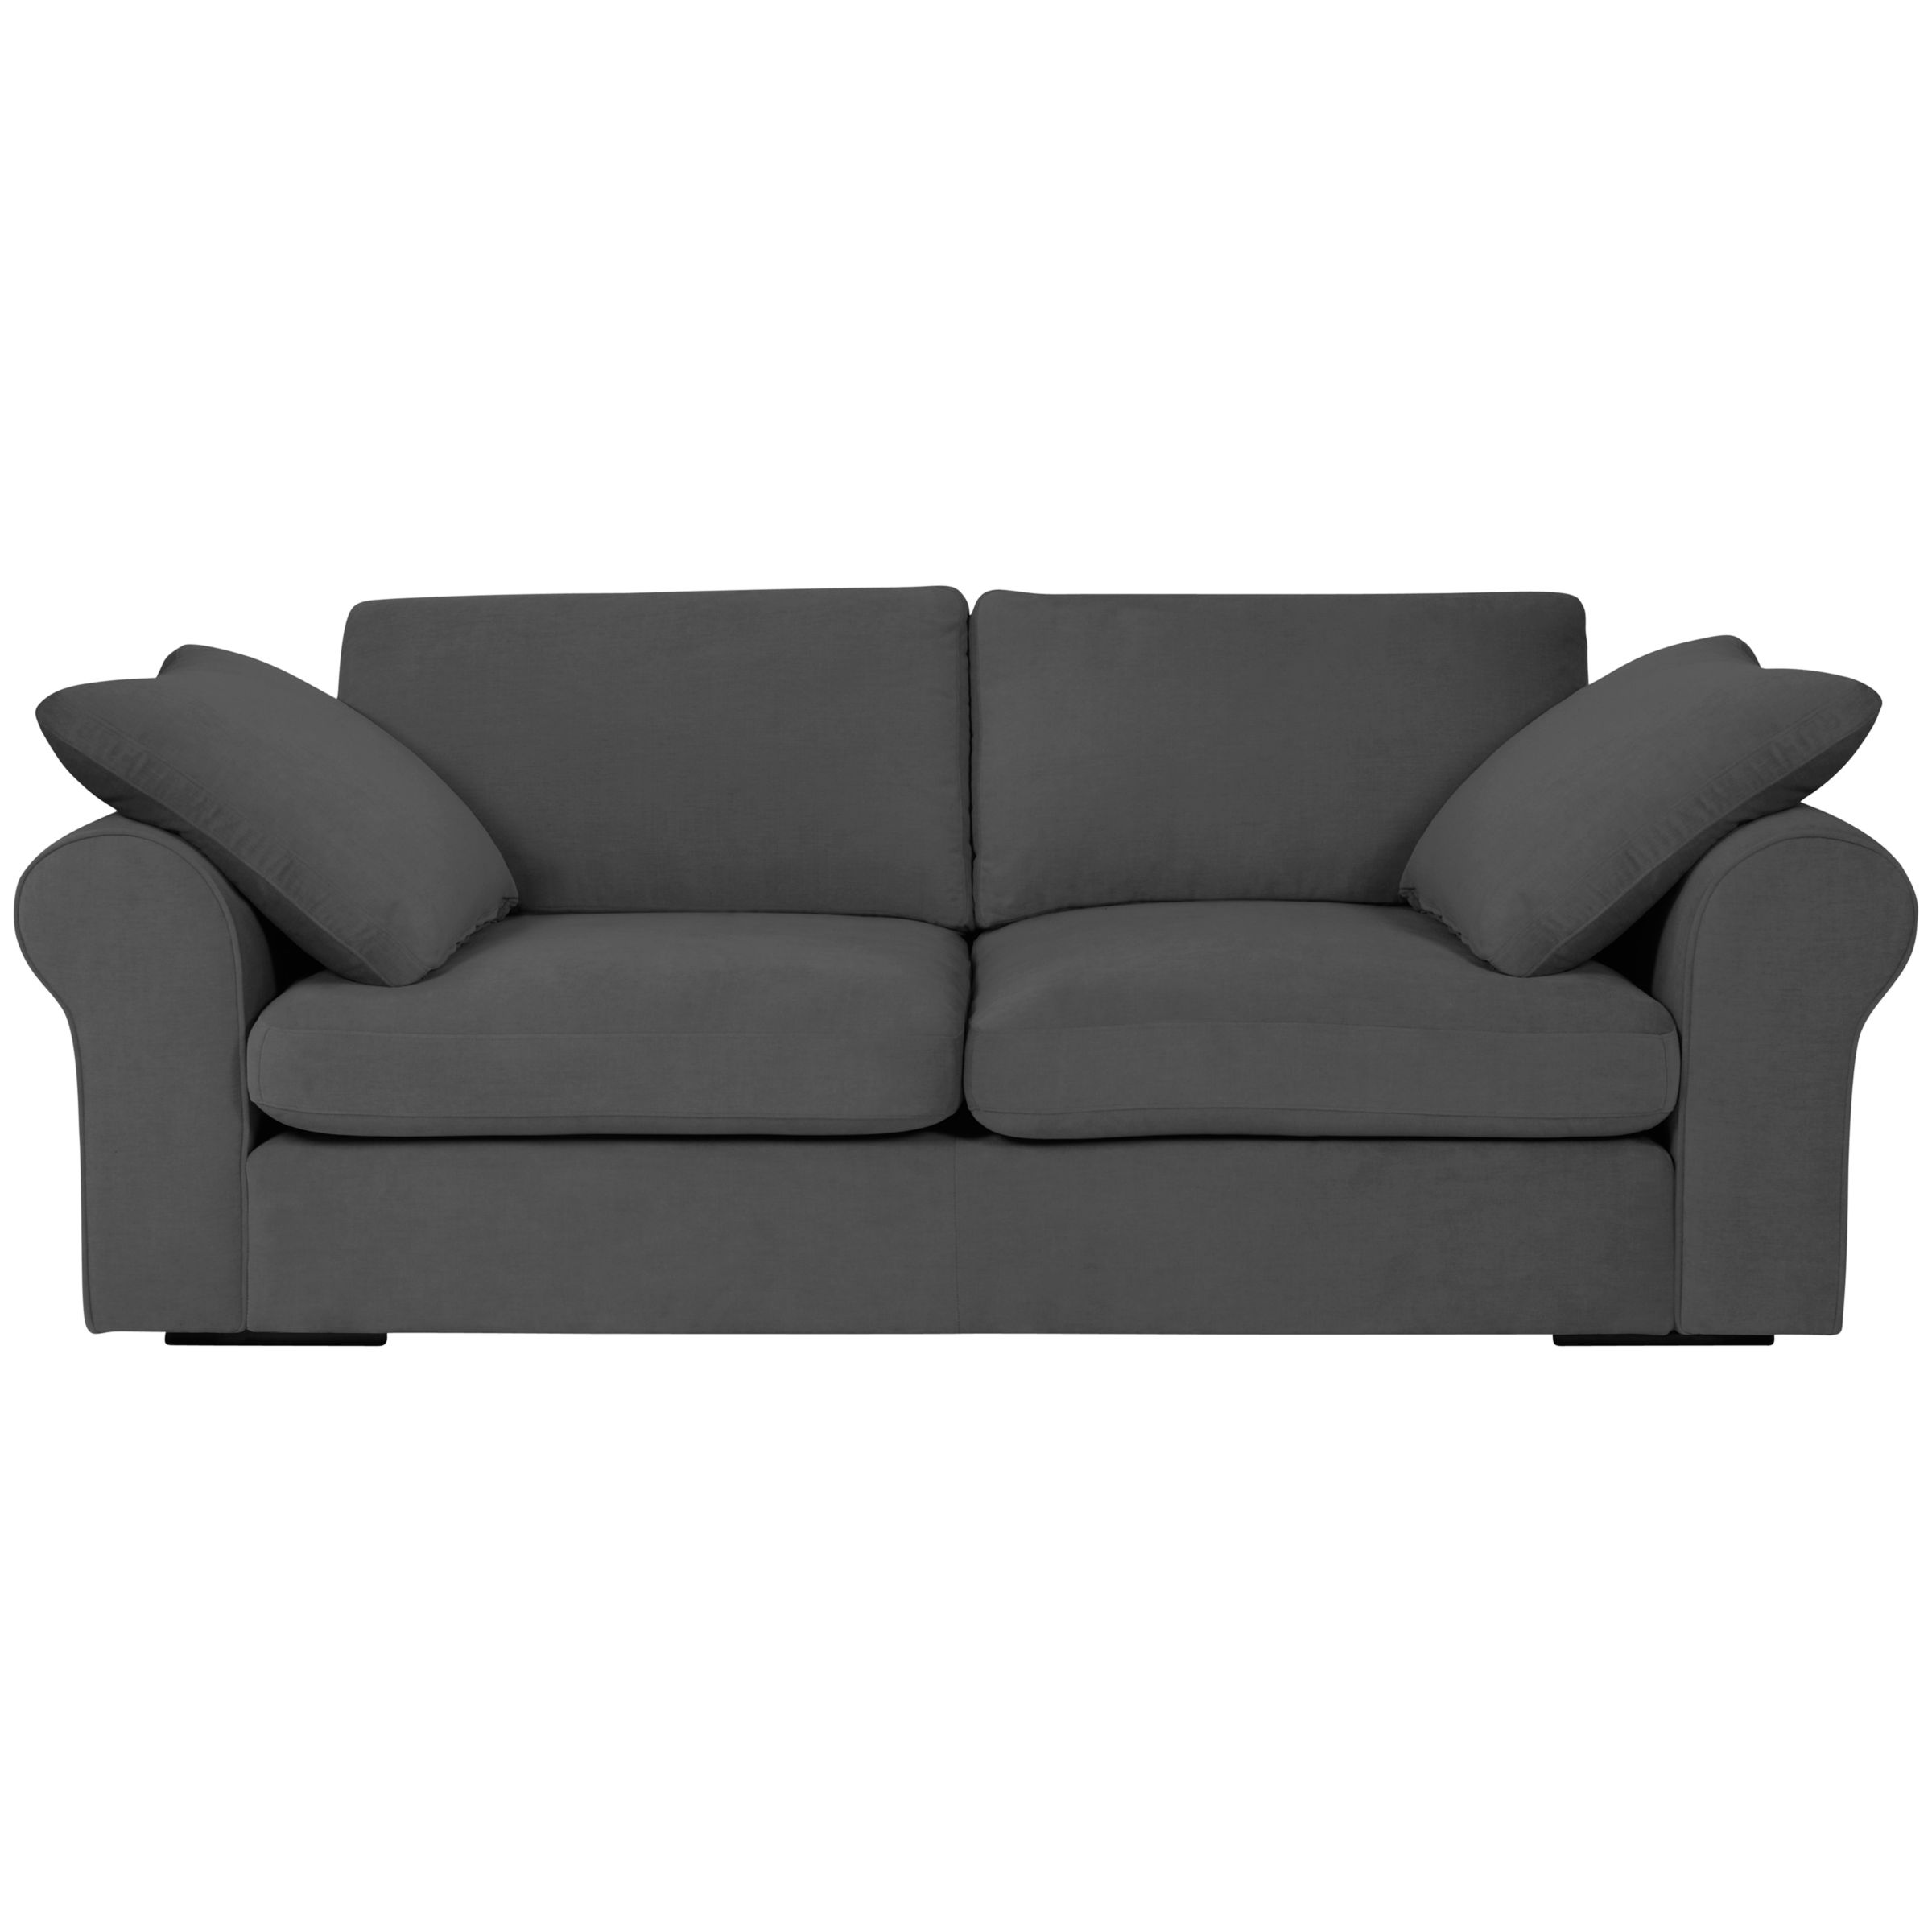 John Lewis Jones Options 2 Scroll Arm Large Sofa, Shadow, width 208cm